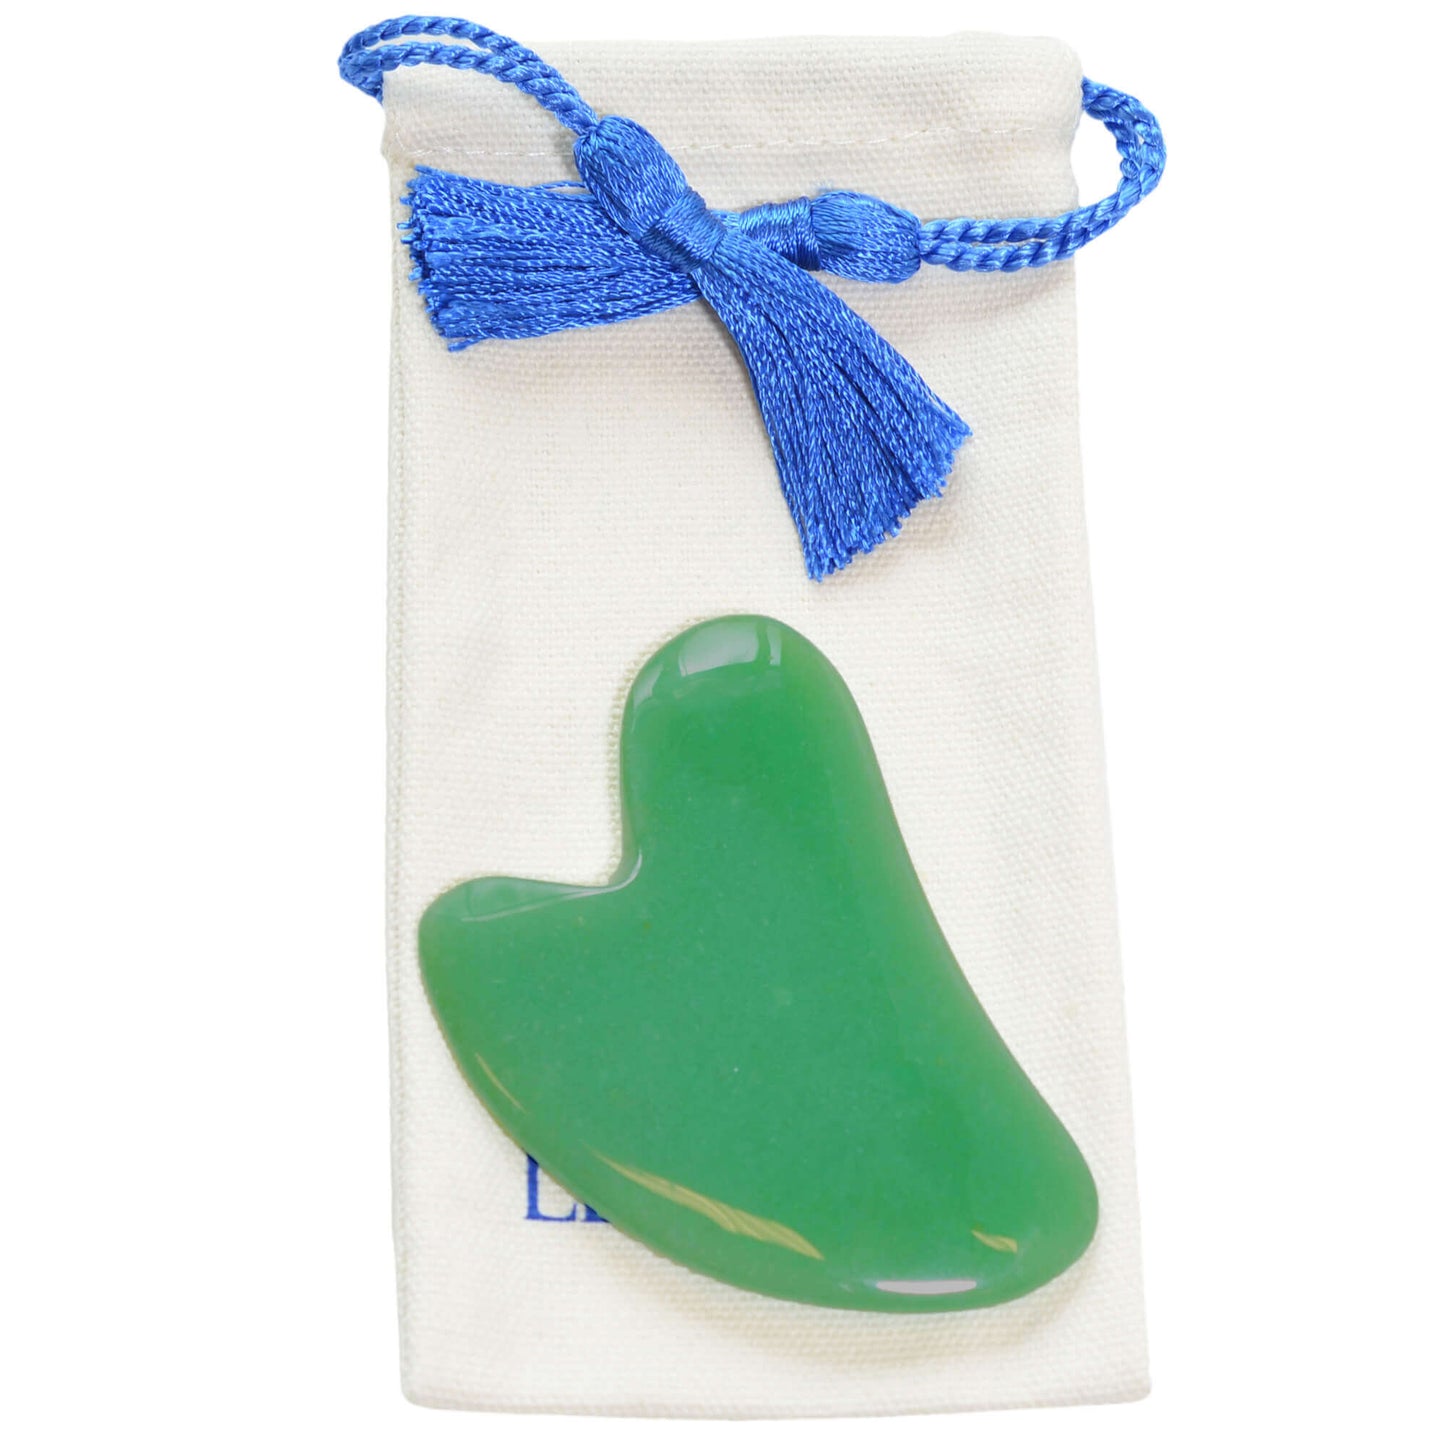 Gua Sha forma del corazón de jade alta calidad